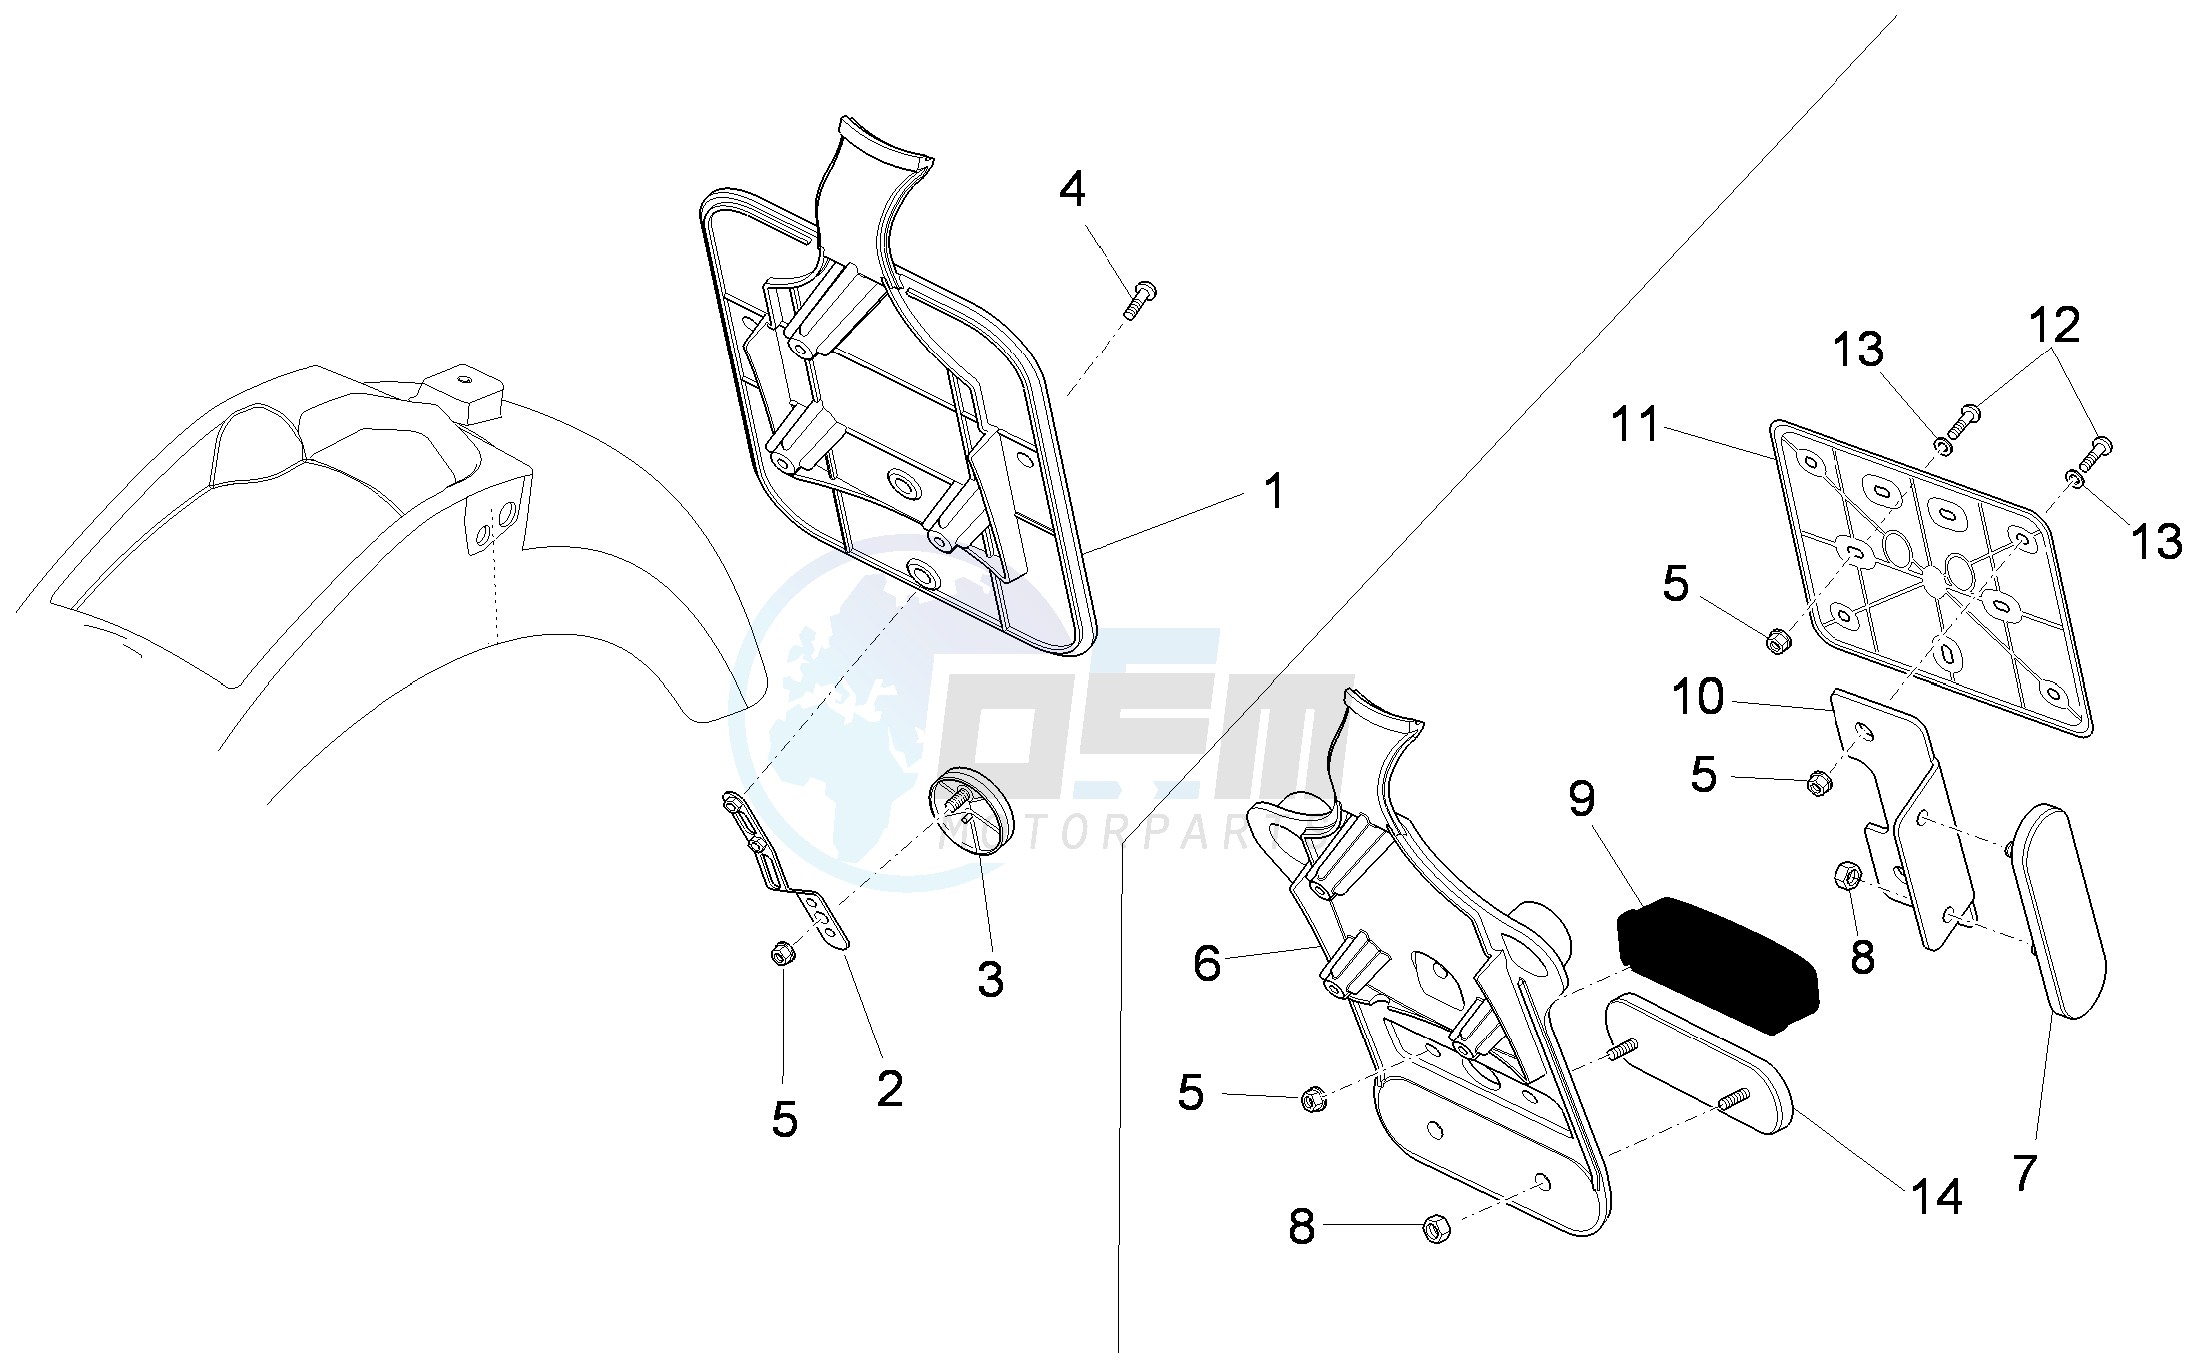 Rear body II- Plate holder blueprint